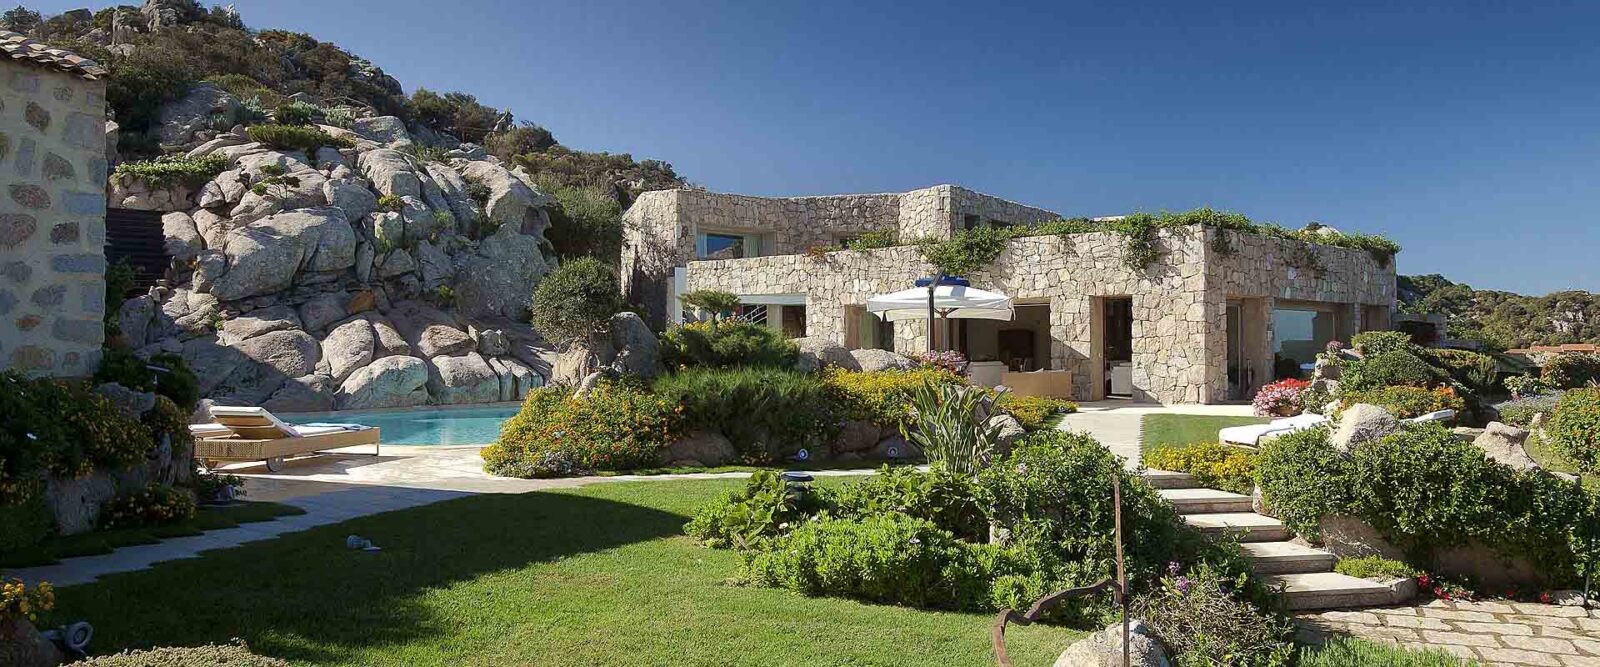 Luxury-Villa-Portocervo-Sardinia-Italy-rent-sale-1